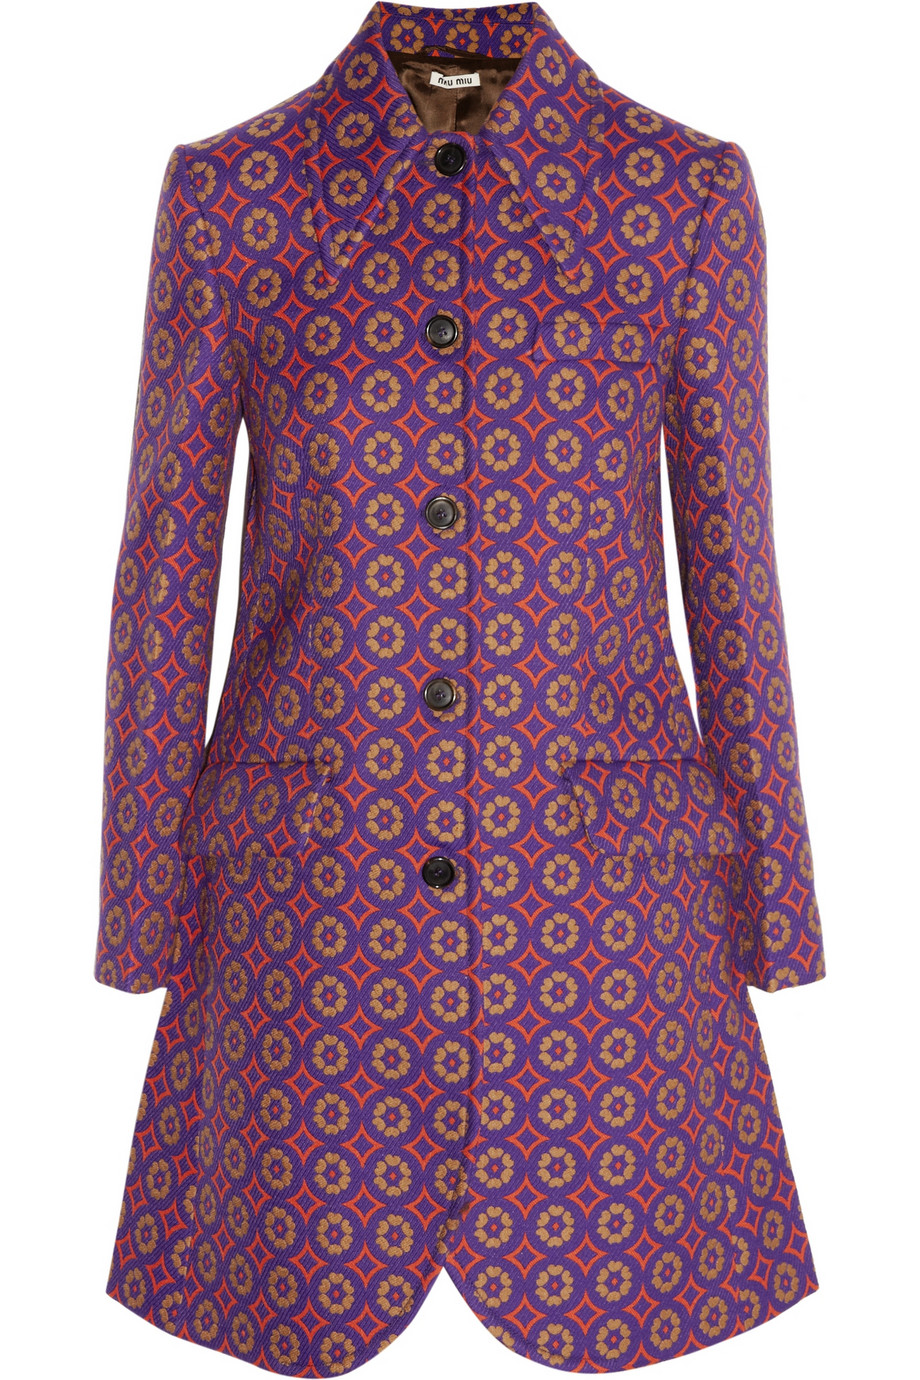 Lyst - Miu miu Jacquard Woven Coat in Purple